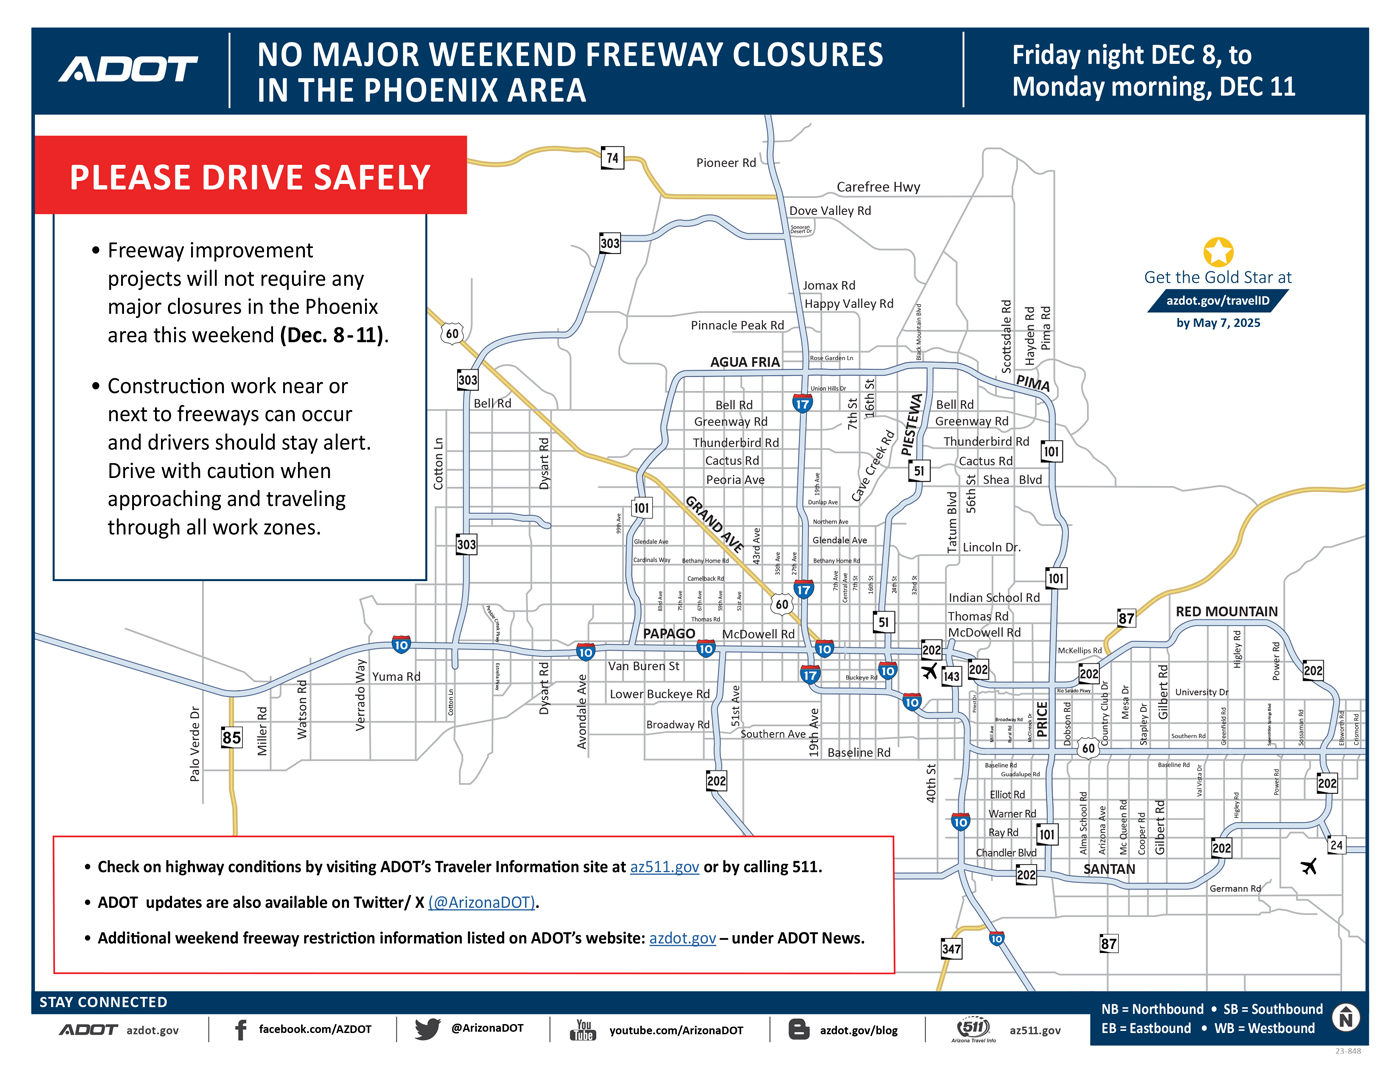 ADOT's Weekend Freeway Travel Advisory Map (Dec. 8-11, '23) - Phoenix Area